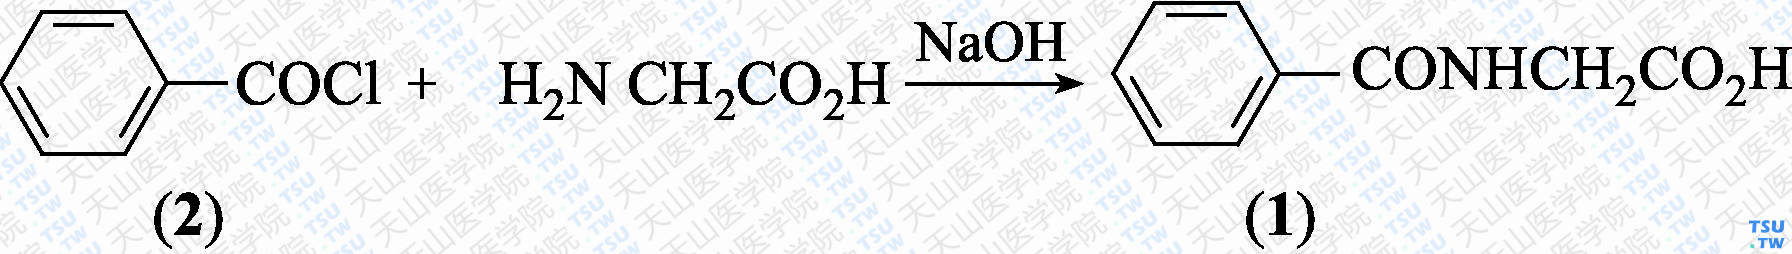 马尿酸（分子式：C<sub>9</sub>H<sub>9</sub>NO<sub>3</sub>）的合成方法路线及其结构式